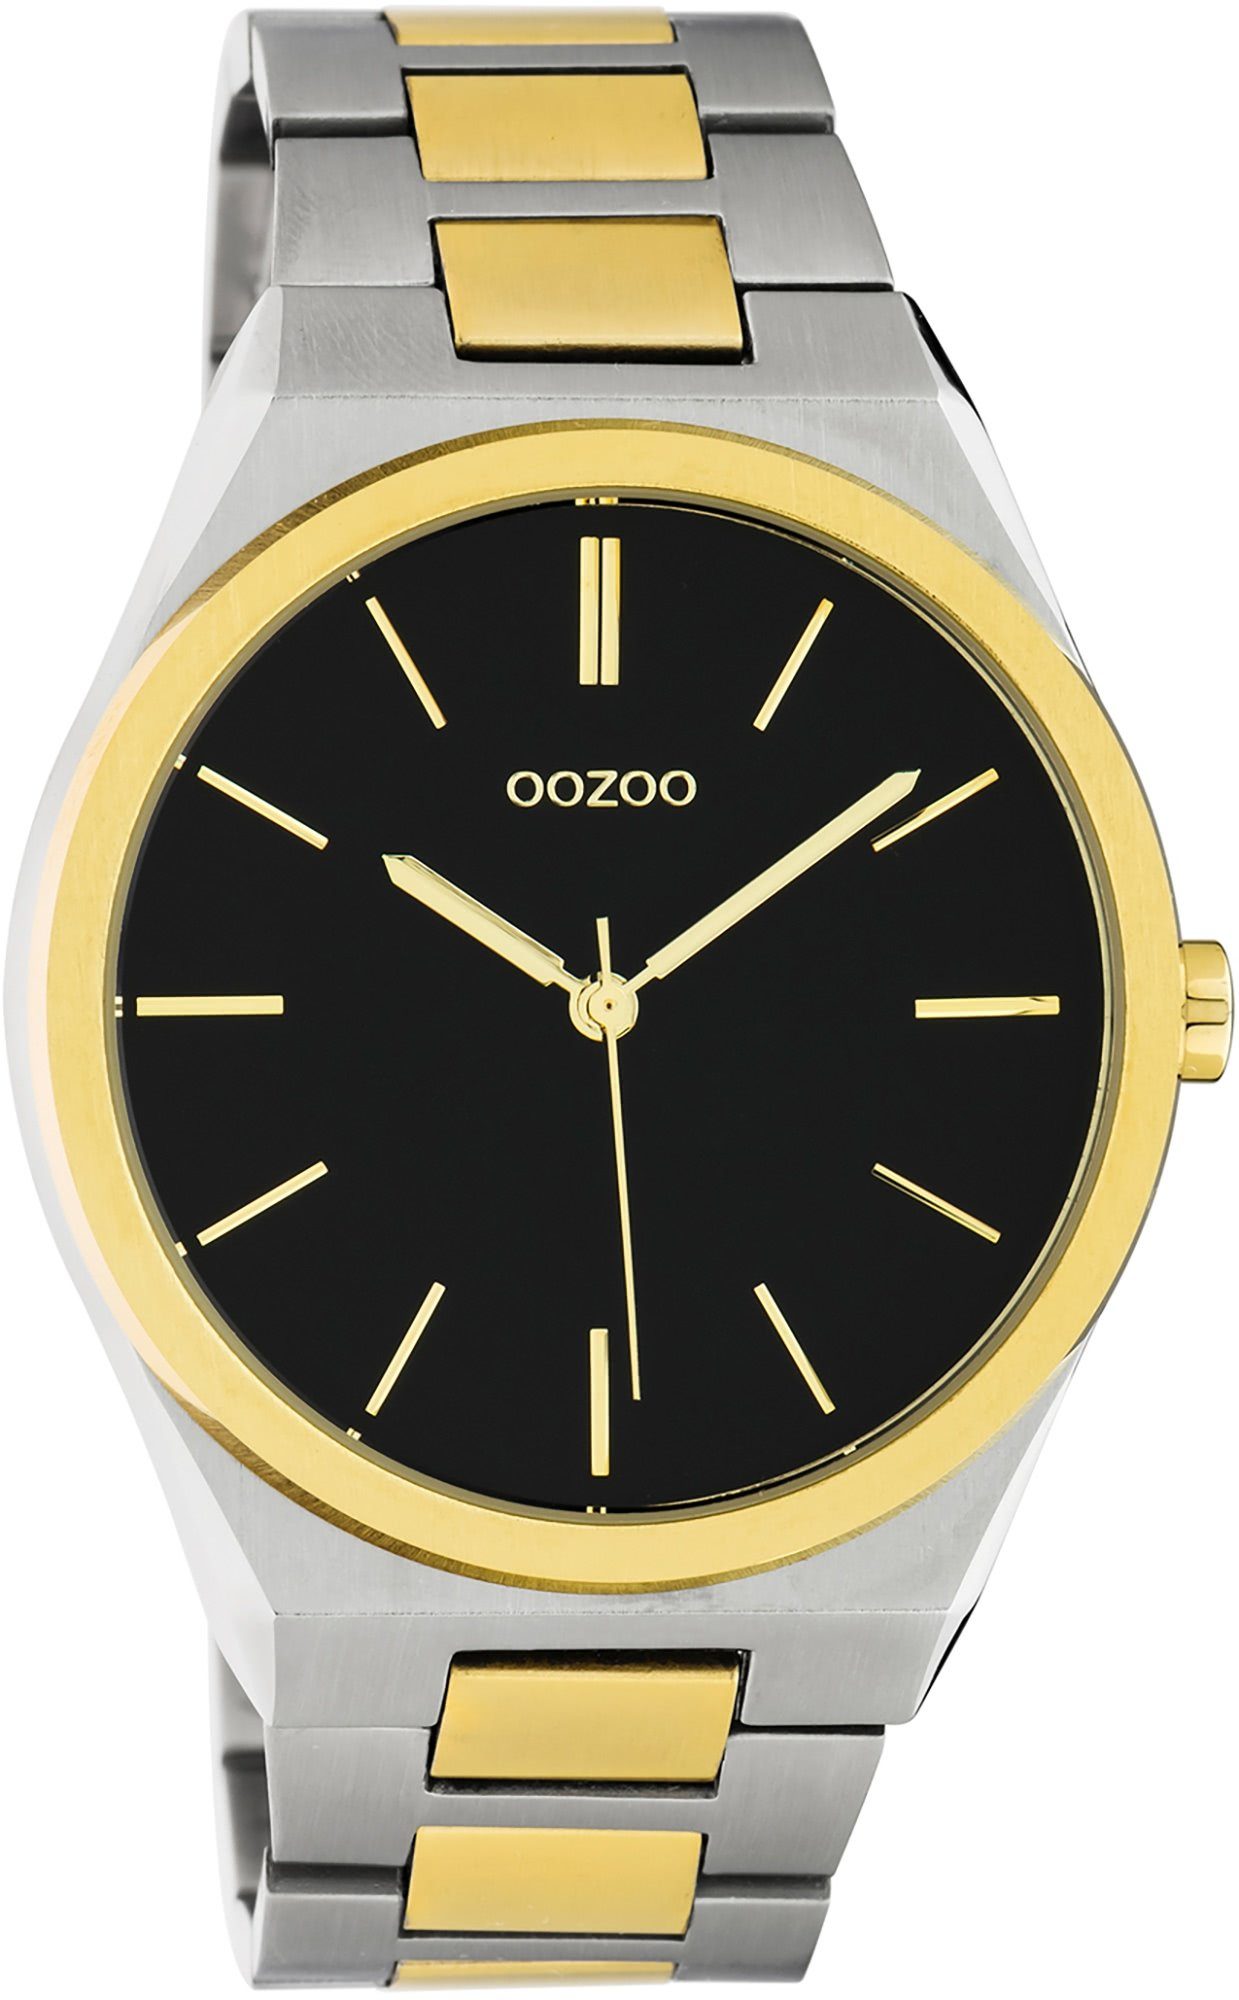 OOZOO Quarzuhr Oozoo 40mm) Armbanduhr Edelstahlarmband, Fashion-Style (ca. Herren, Damenuhr Unisex groß rund, silber gold